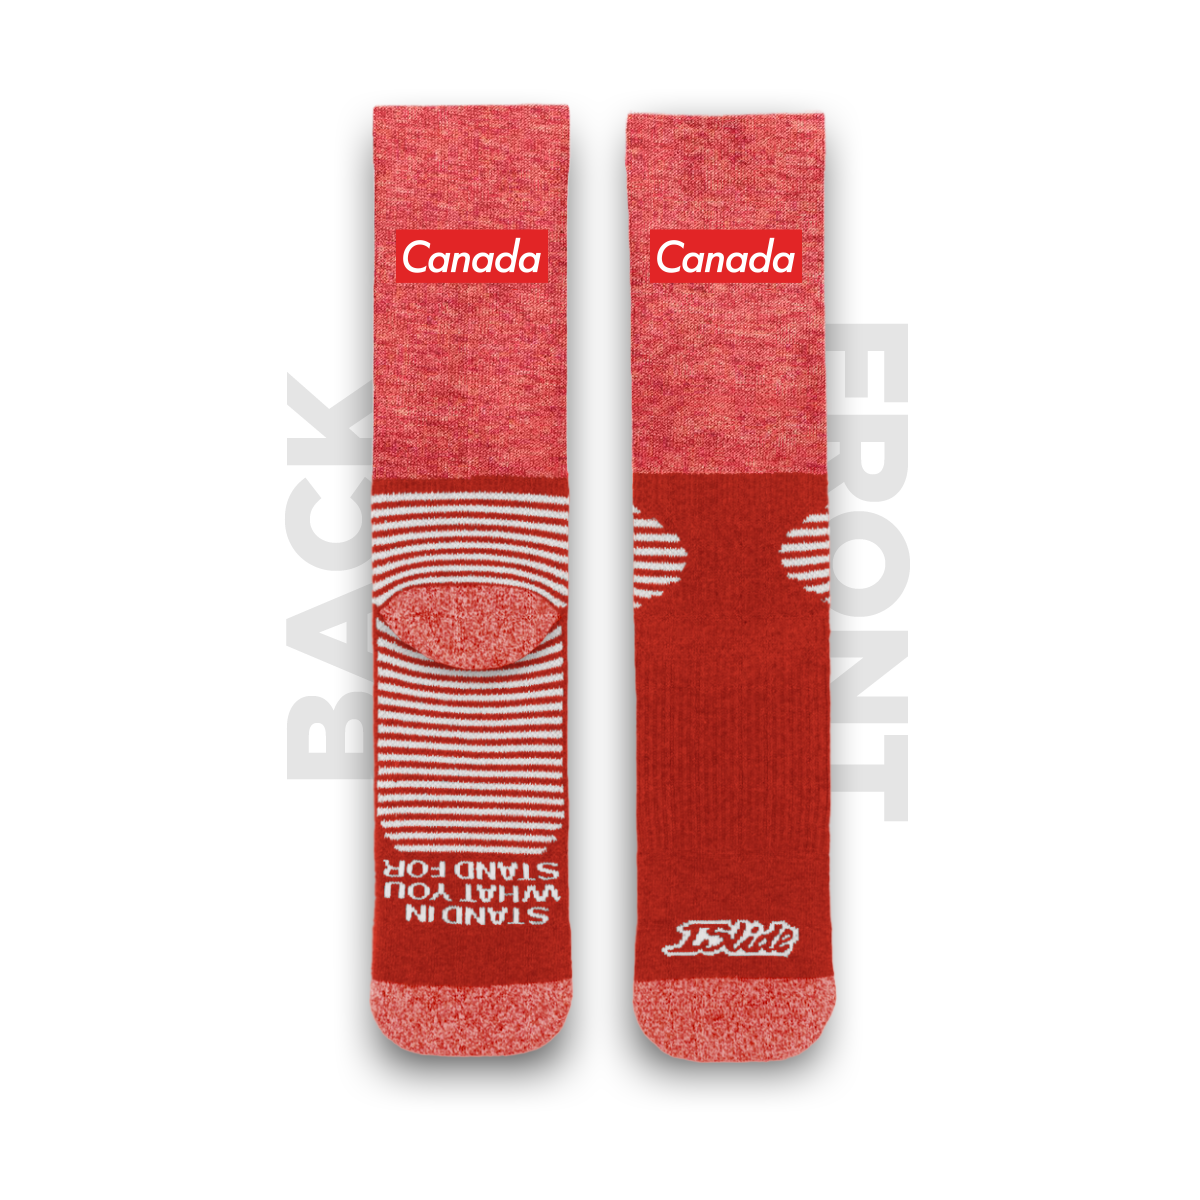 Keaton Veillette 'Canada' Socks